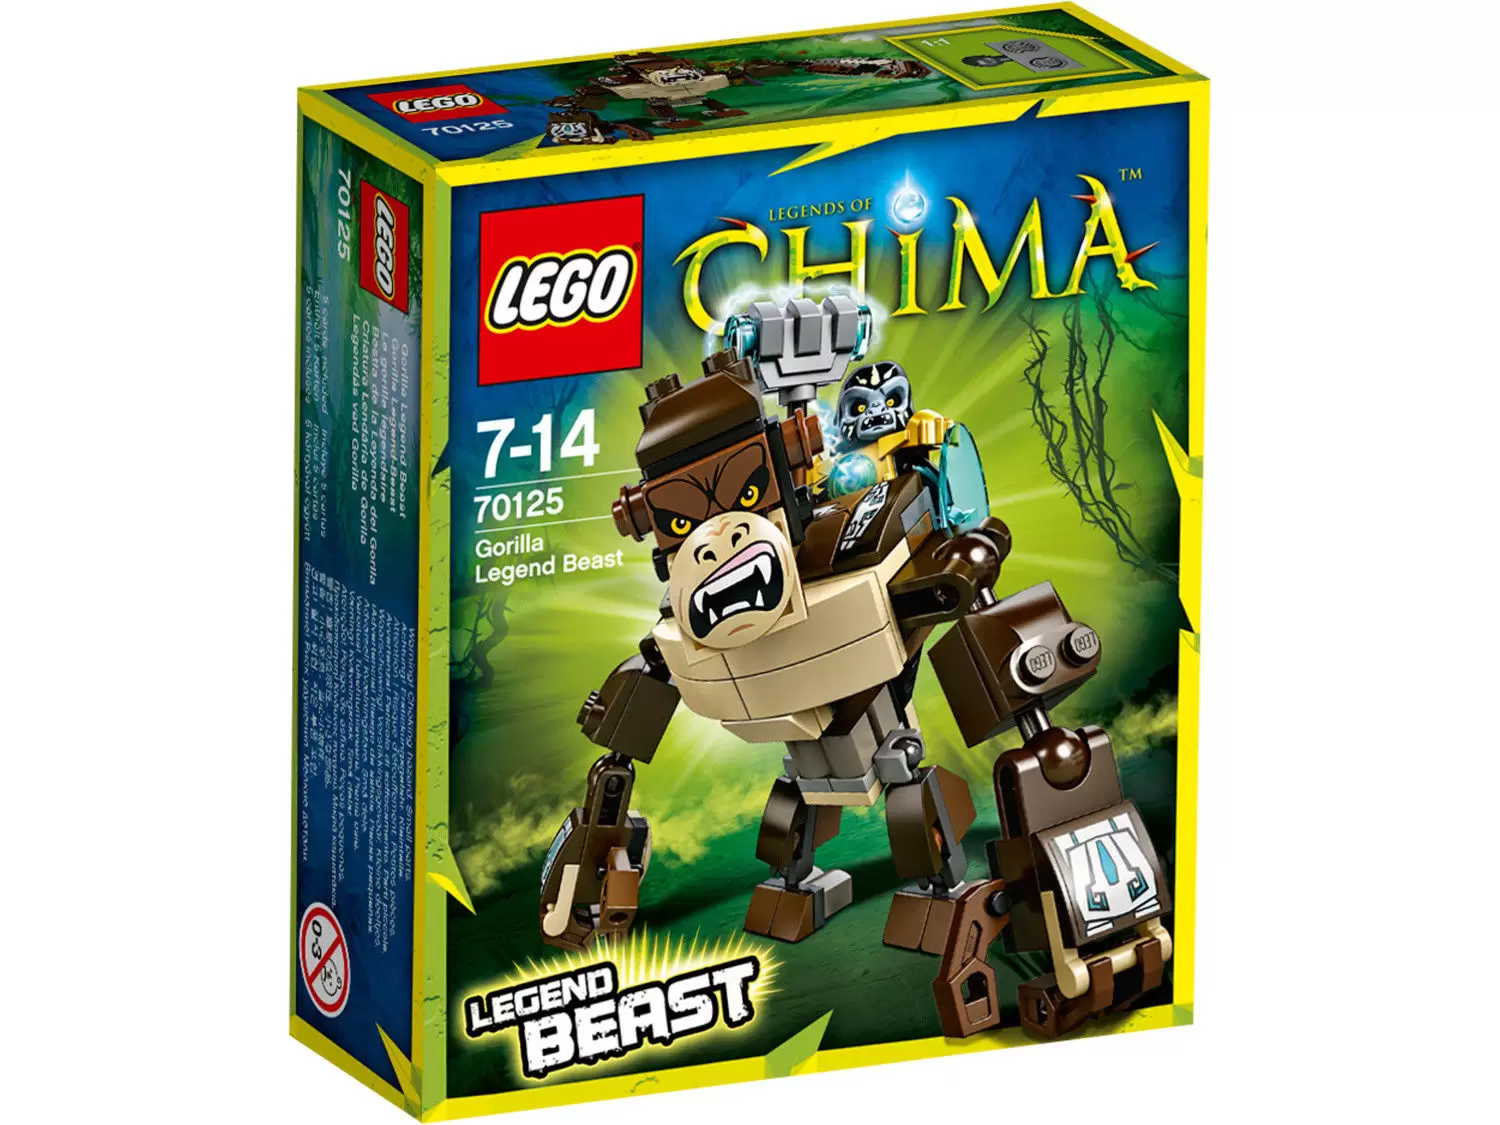 LEGO Legends of Chima - Gorilla Legend Beast